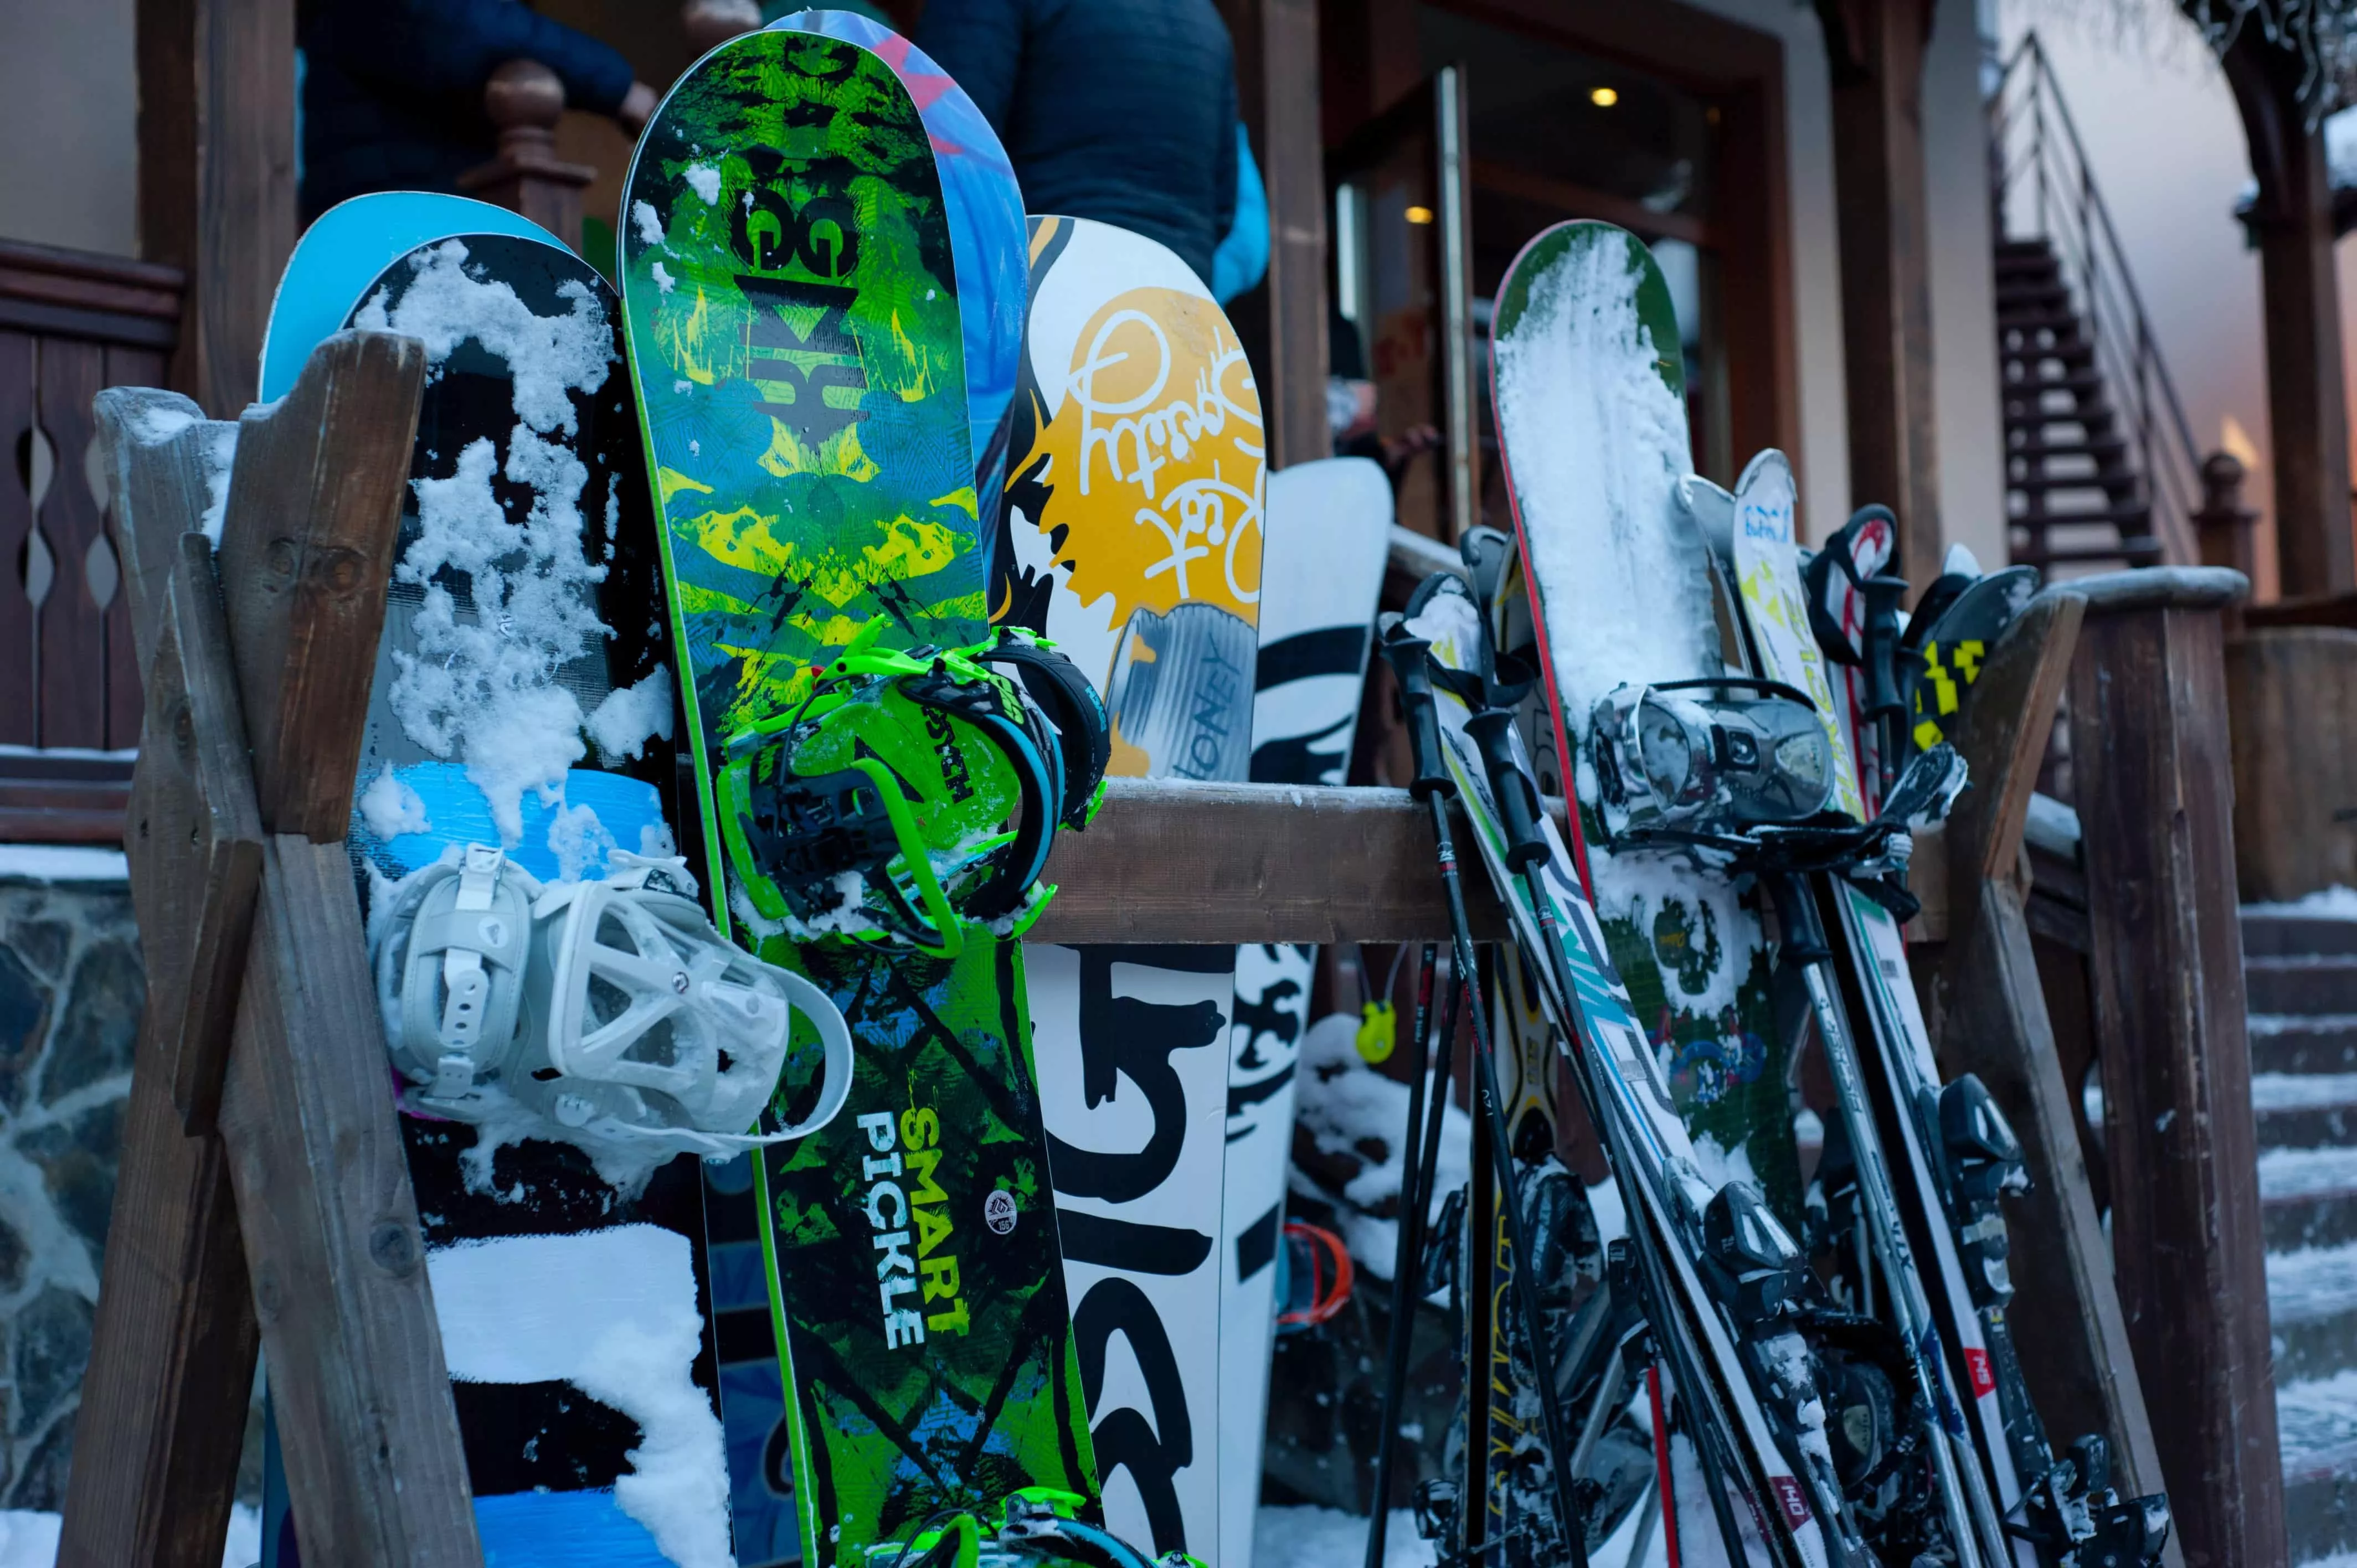 Happy Skis Ski Rental in Switzerland, Europe | Snowboarding,Skiing - Rated 1